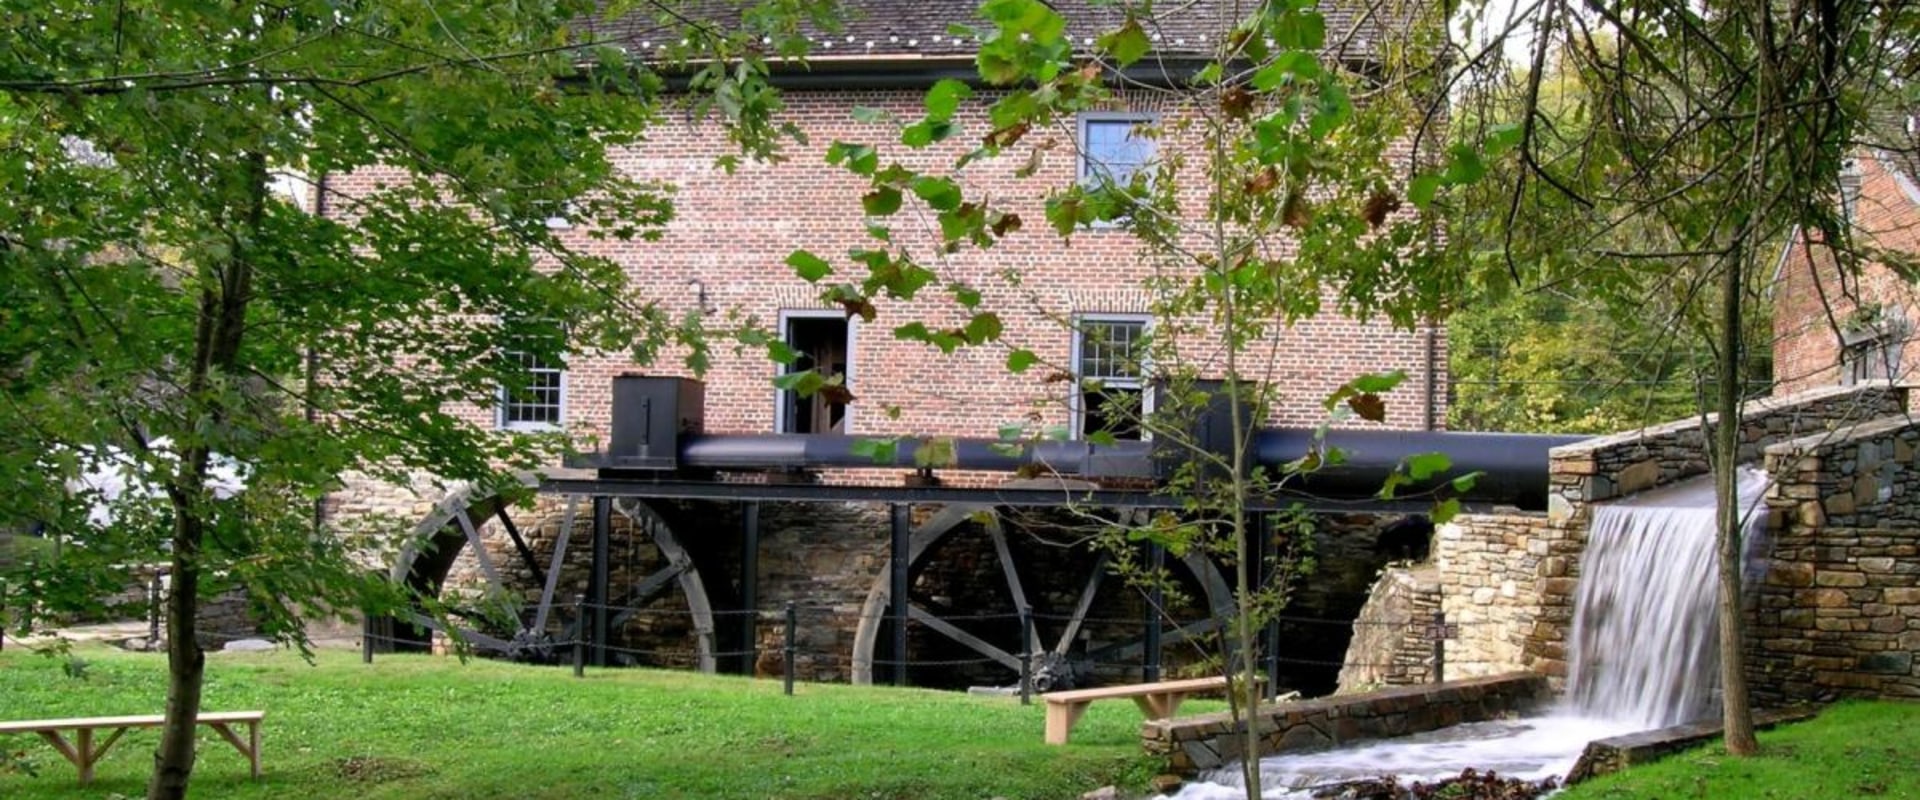 Exploring the Historical Aldie Mill in Loudoun County, VA